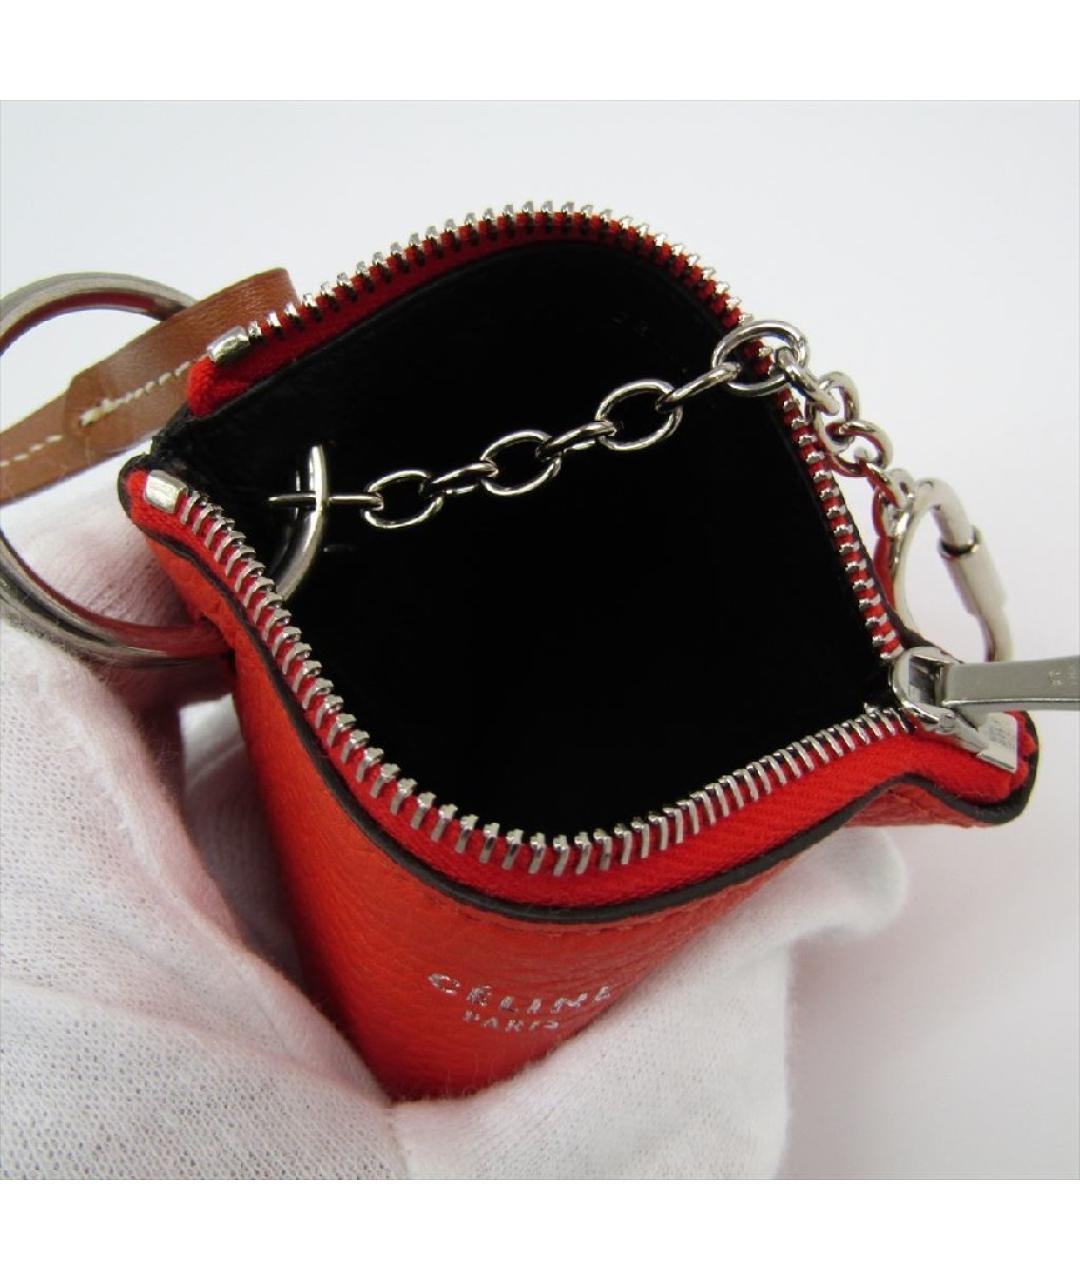 CELINE PRE-OWNED Красный кожаный кошелек, фото 3